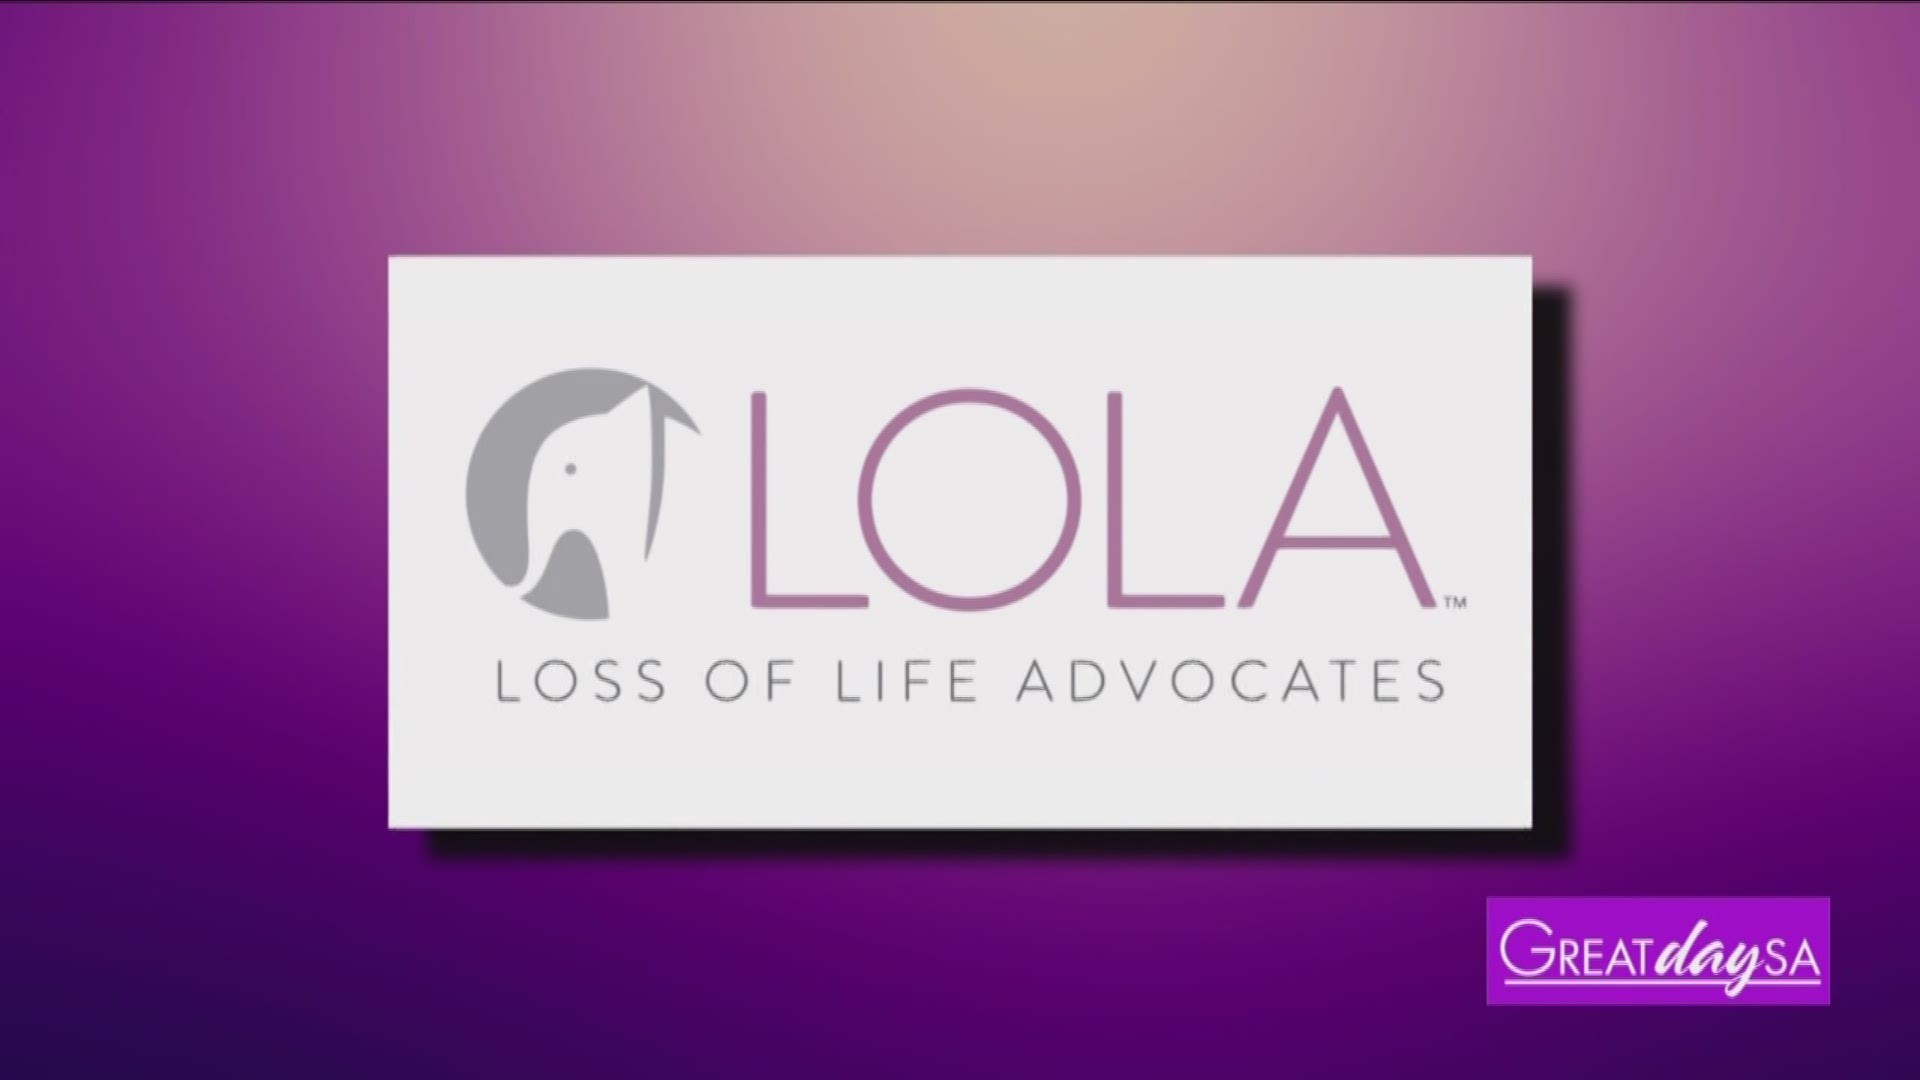 Loss of Life advocates